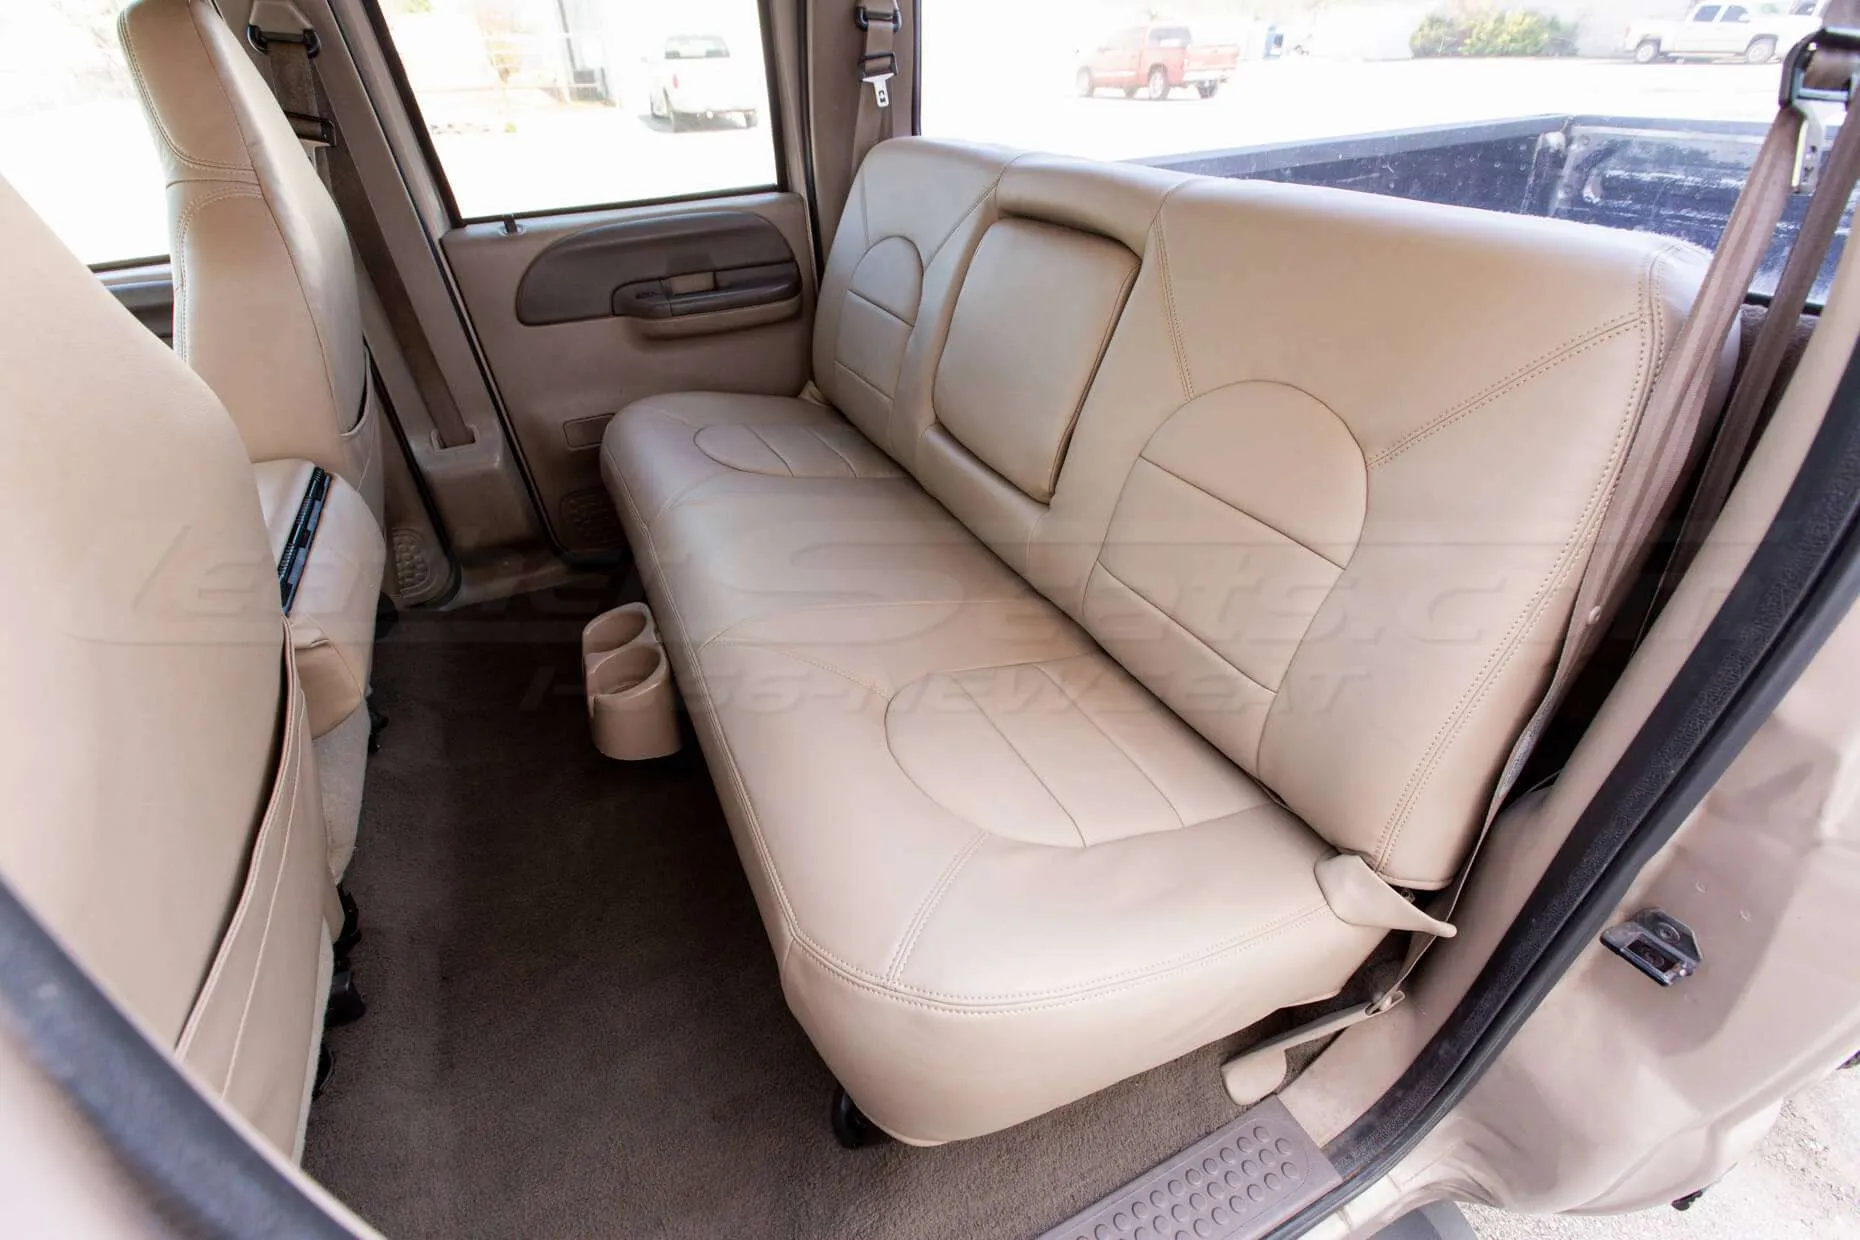 Ford Superduty Leather Seats - Nutmeg - Rear seats